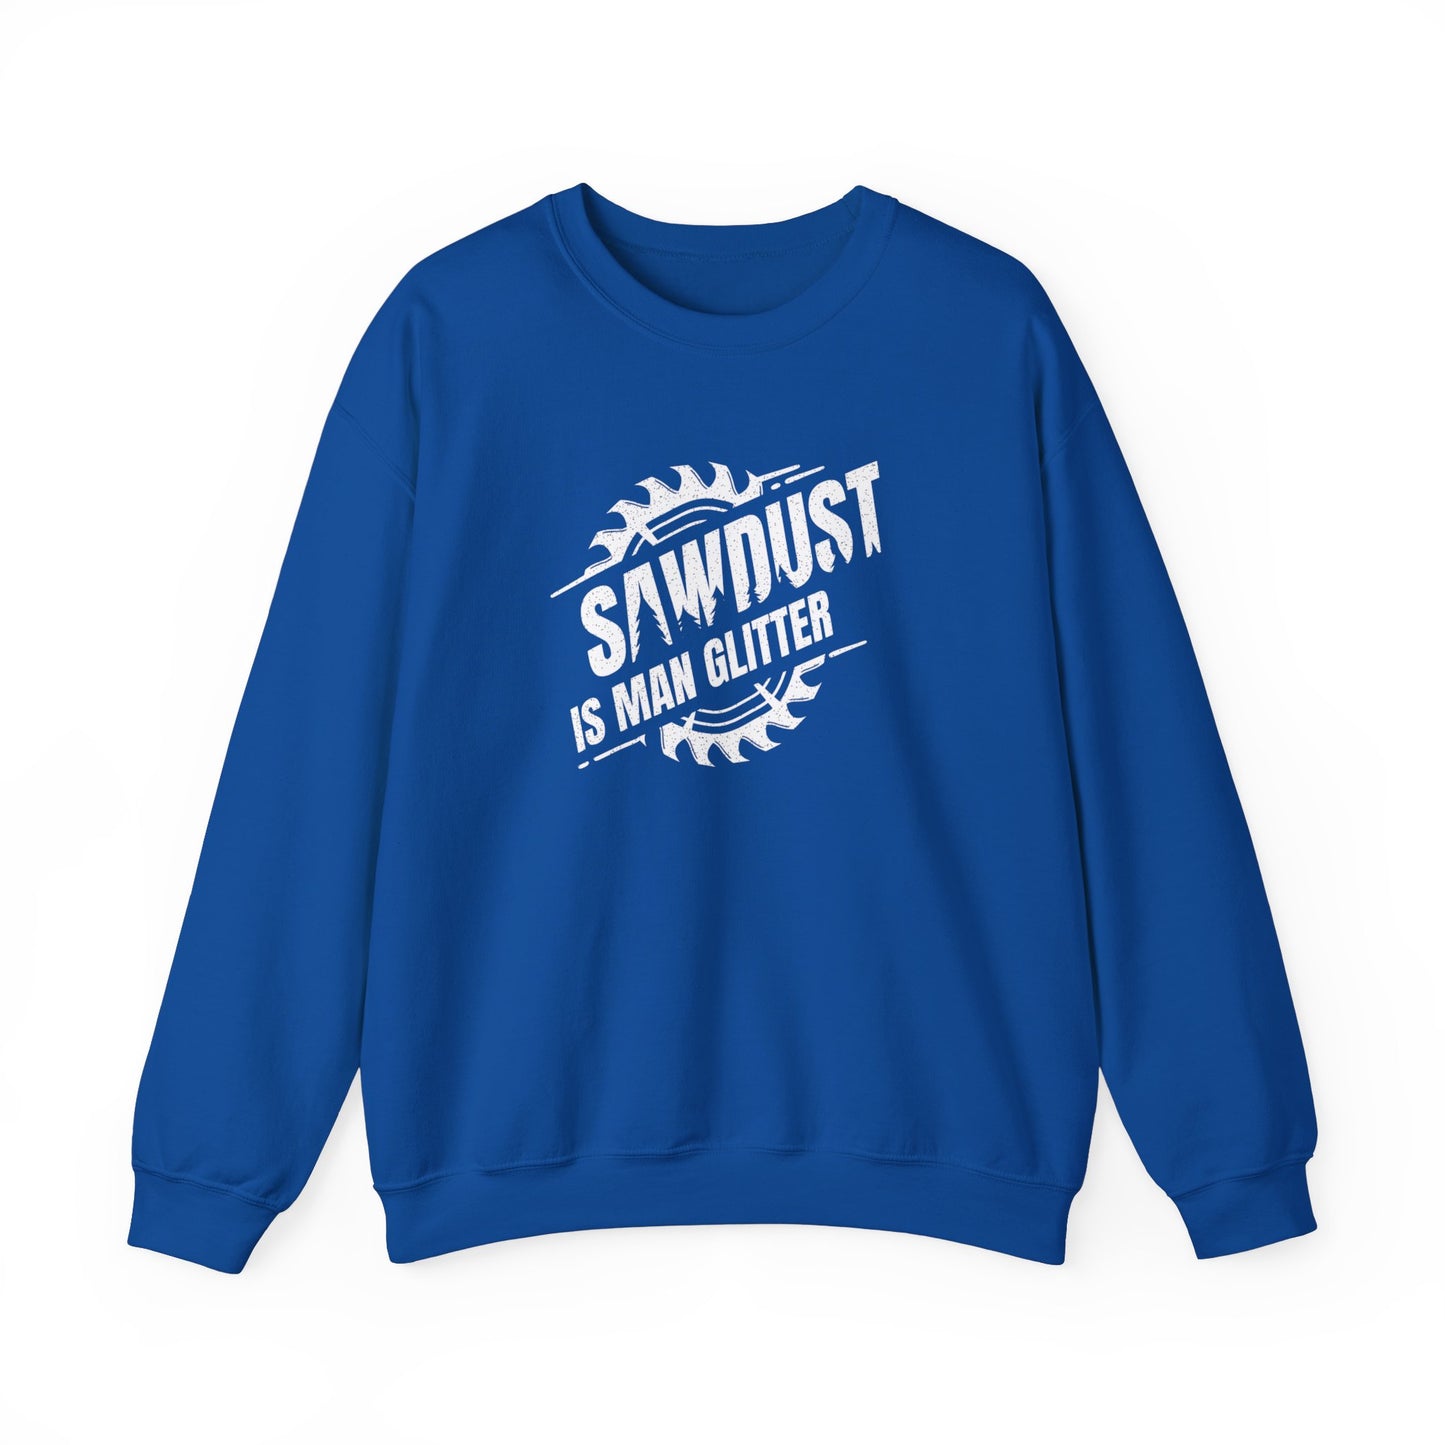 Sawdust Is Man Glitter -  Crewneck Sweatshirt Unisex S-3XL